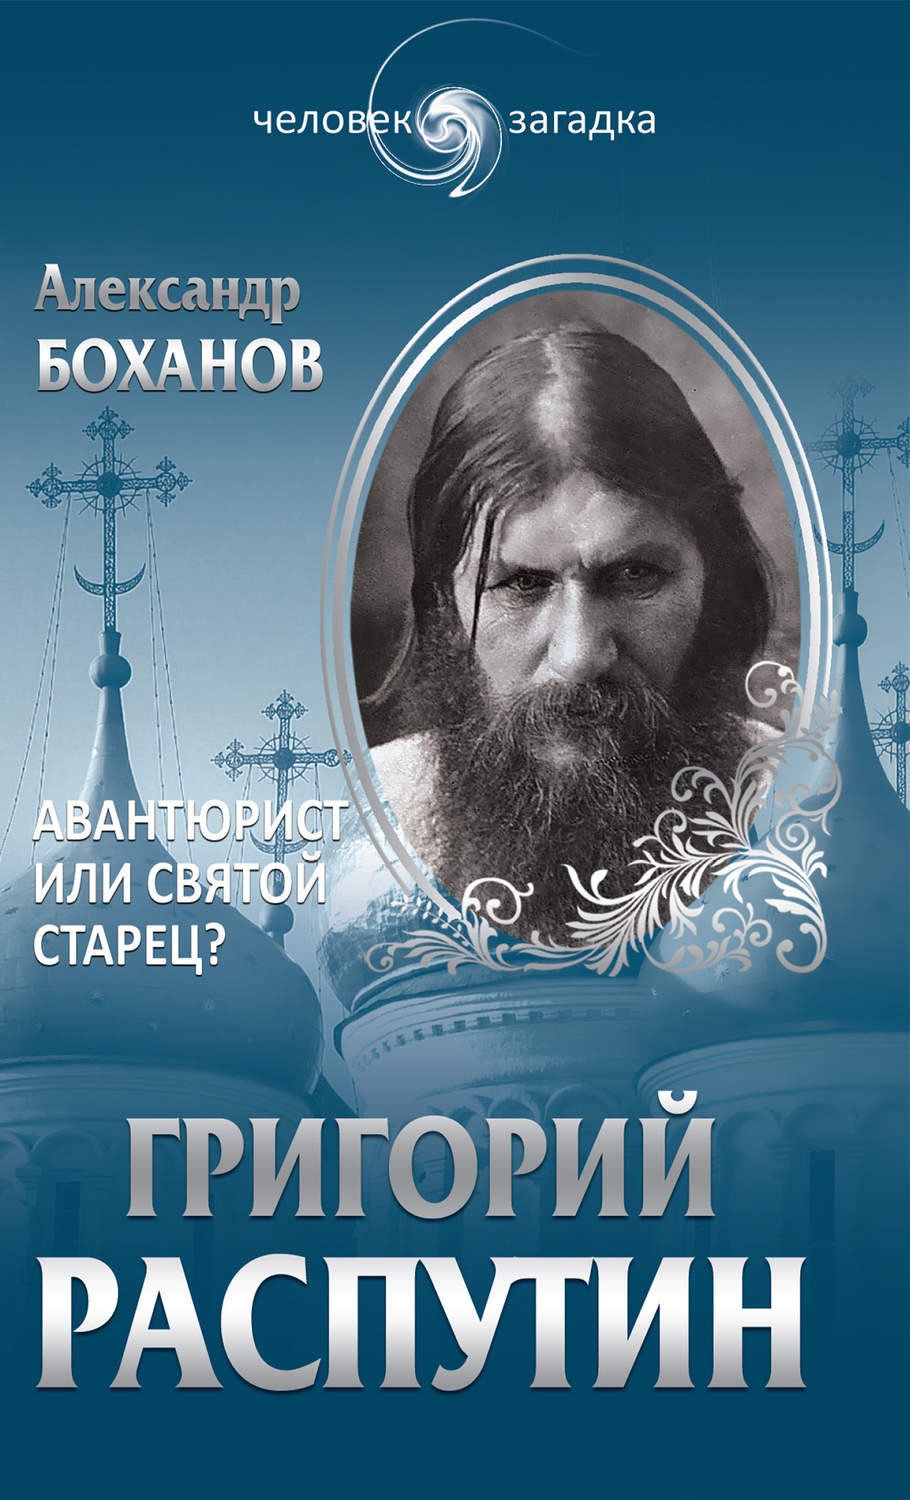 Боханов Александр Николаевич - «Григорий Распутин. Авантюрист или святой старец?»